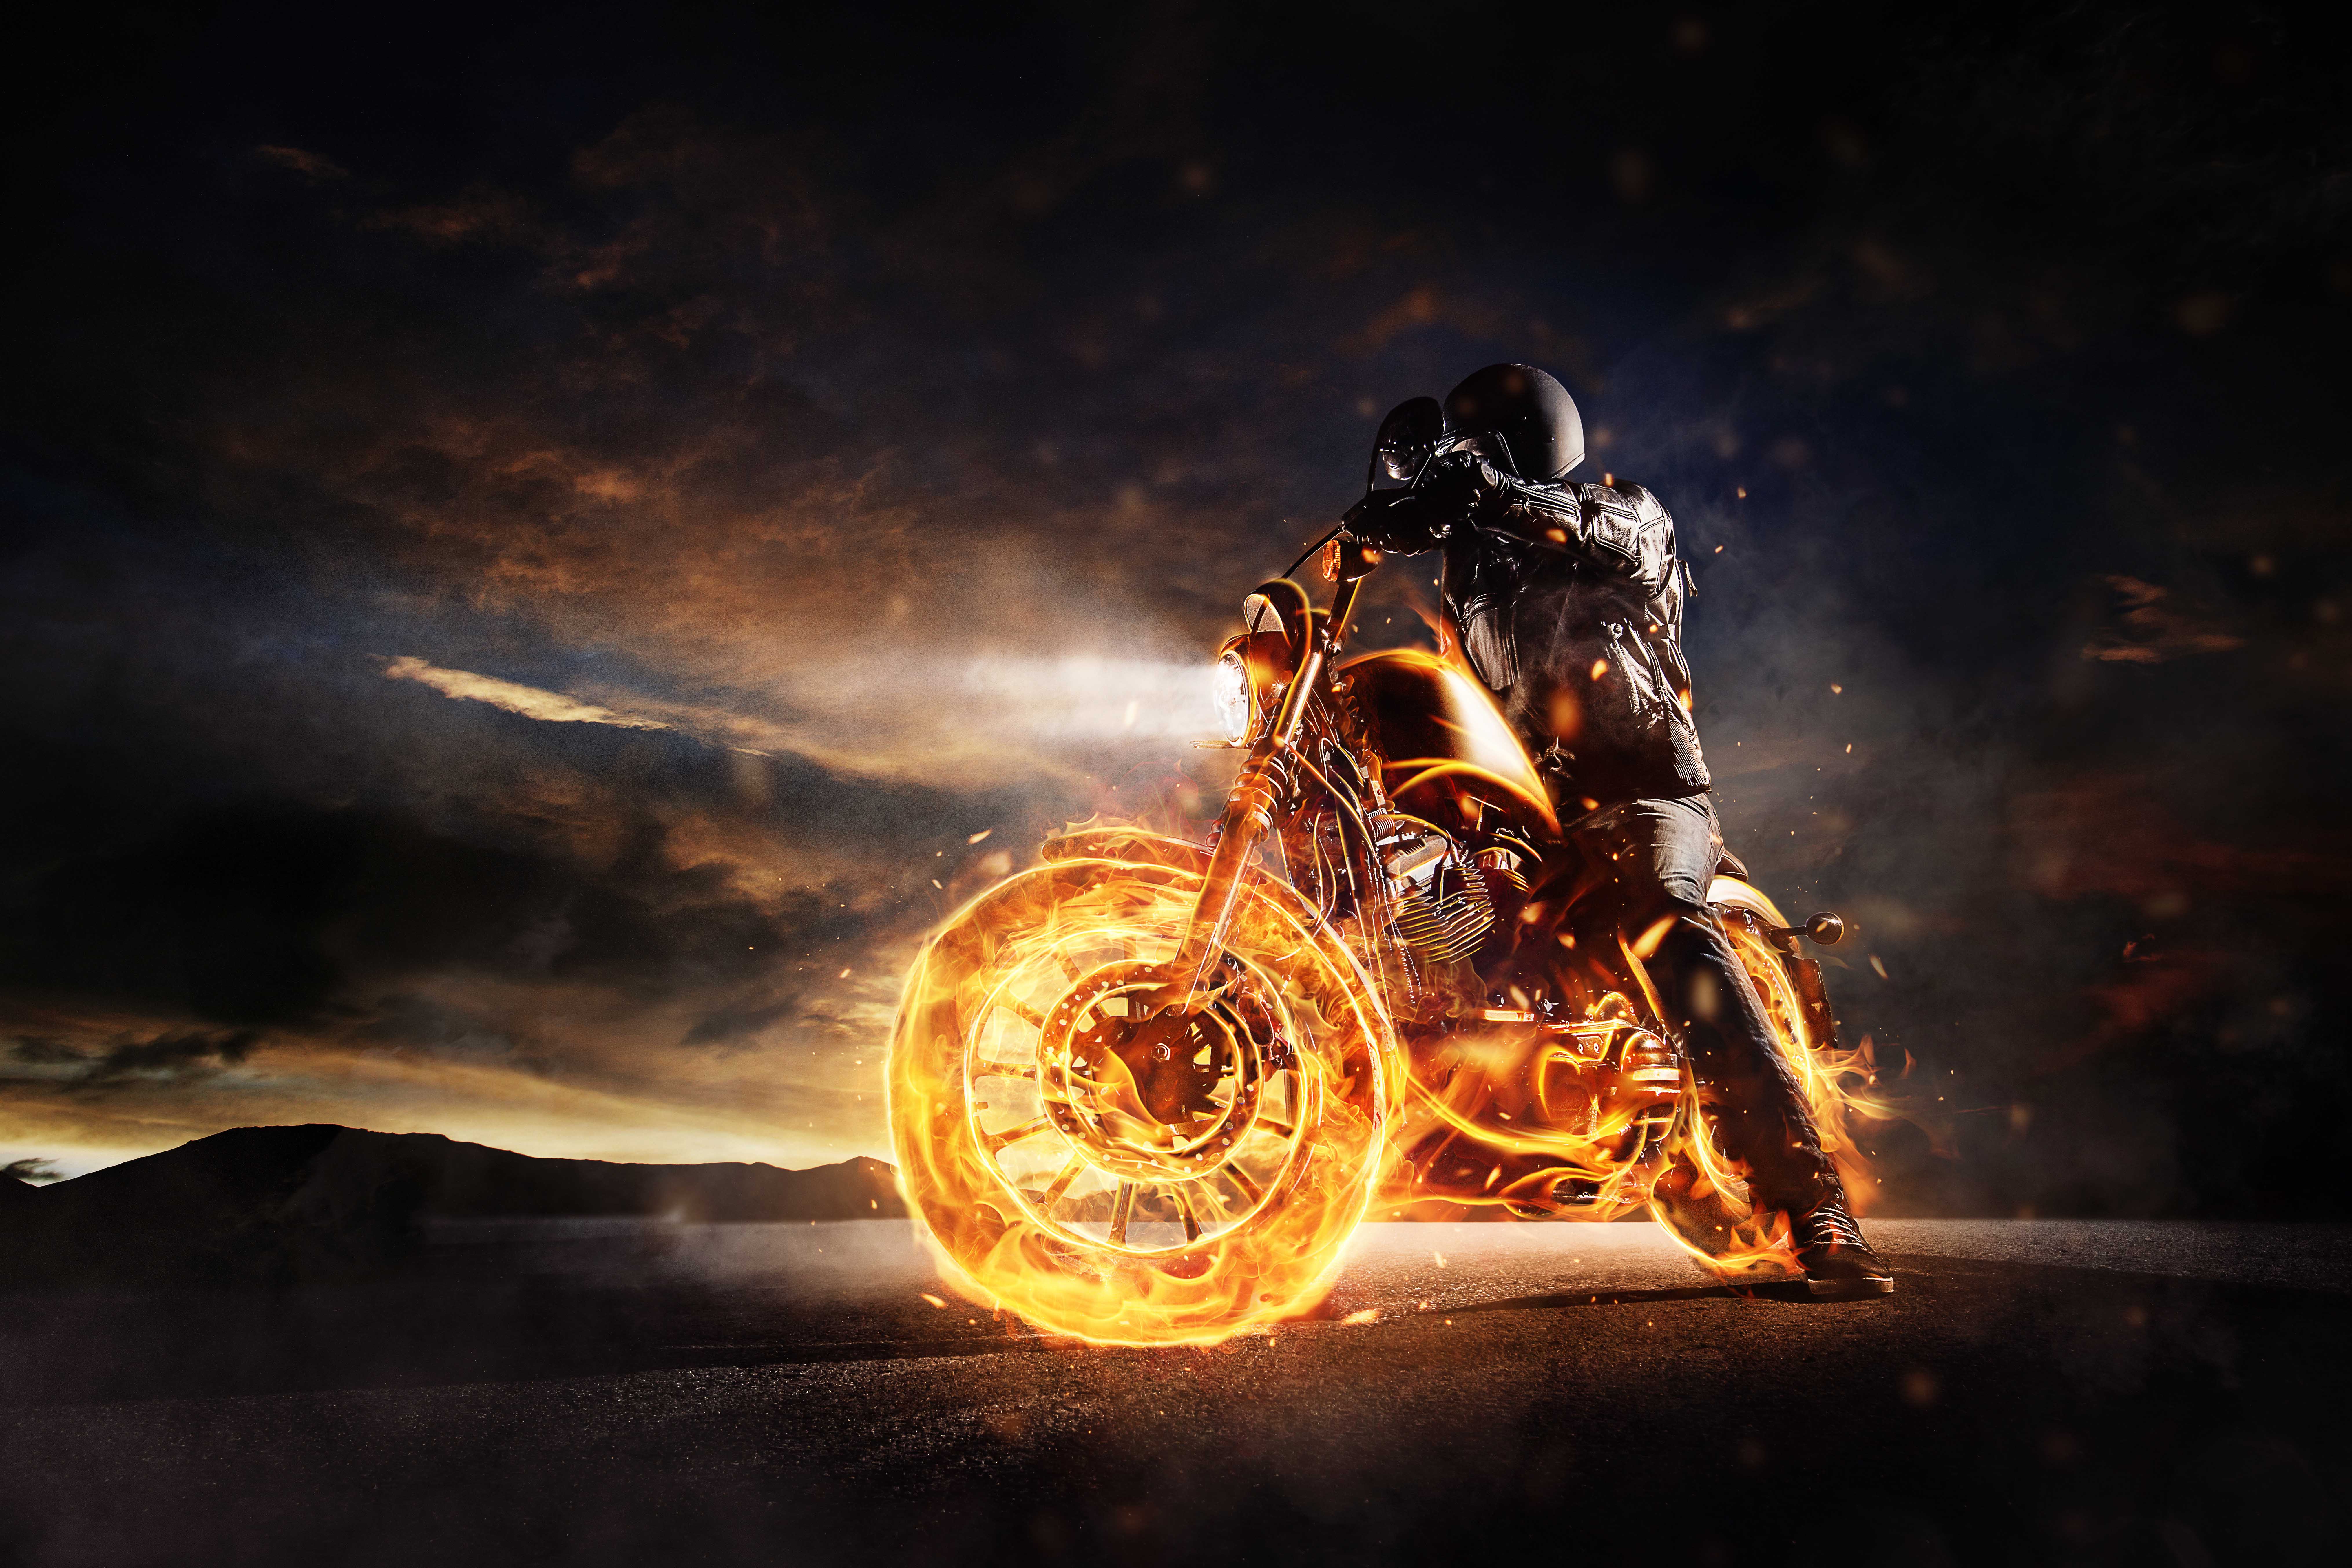 Burning motorcycle